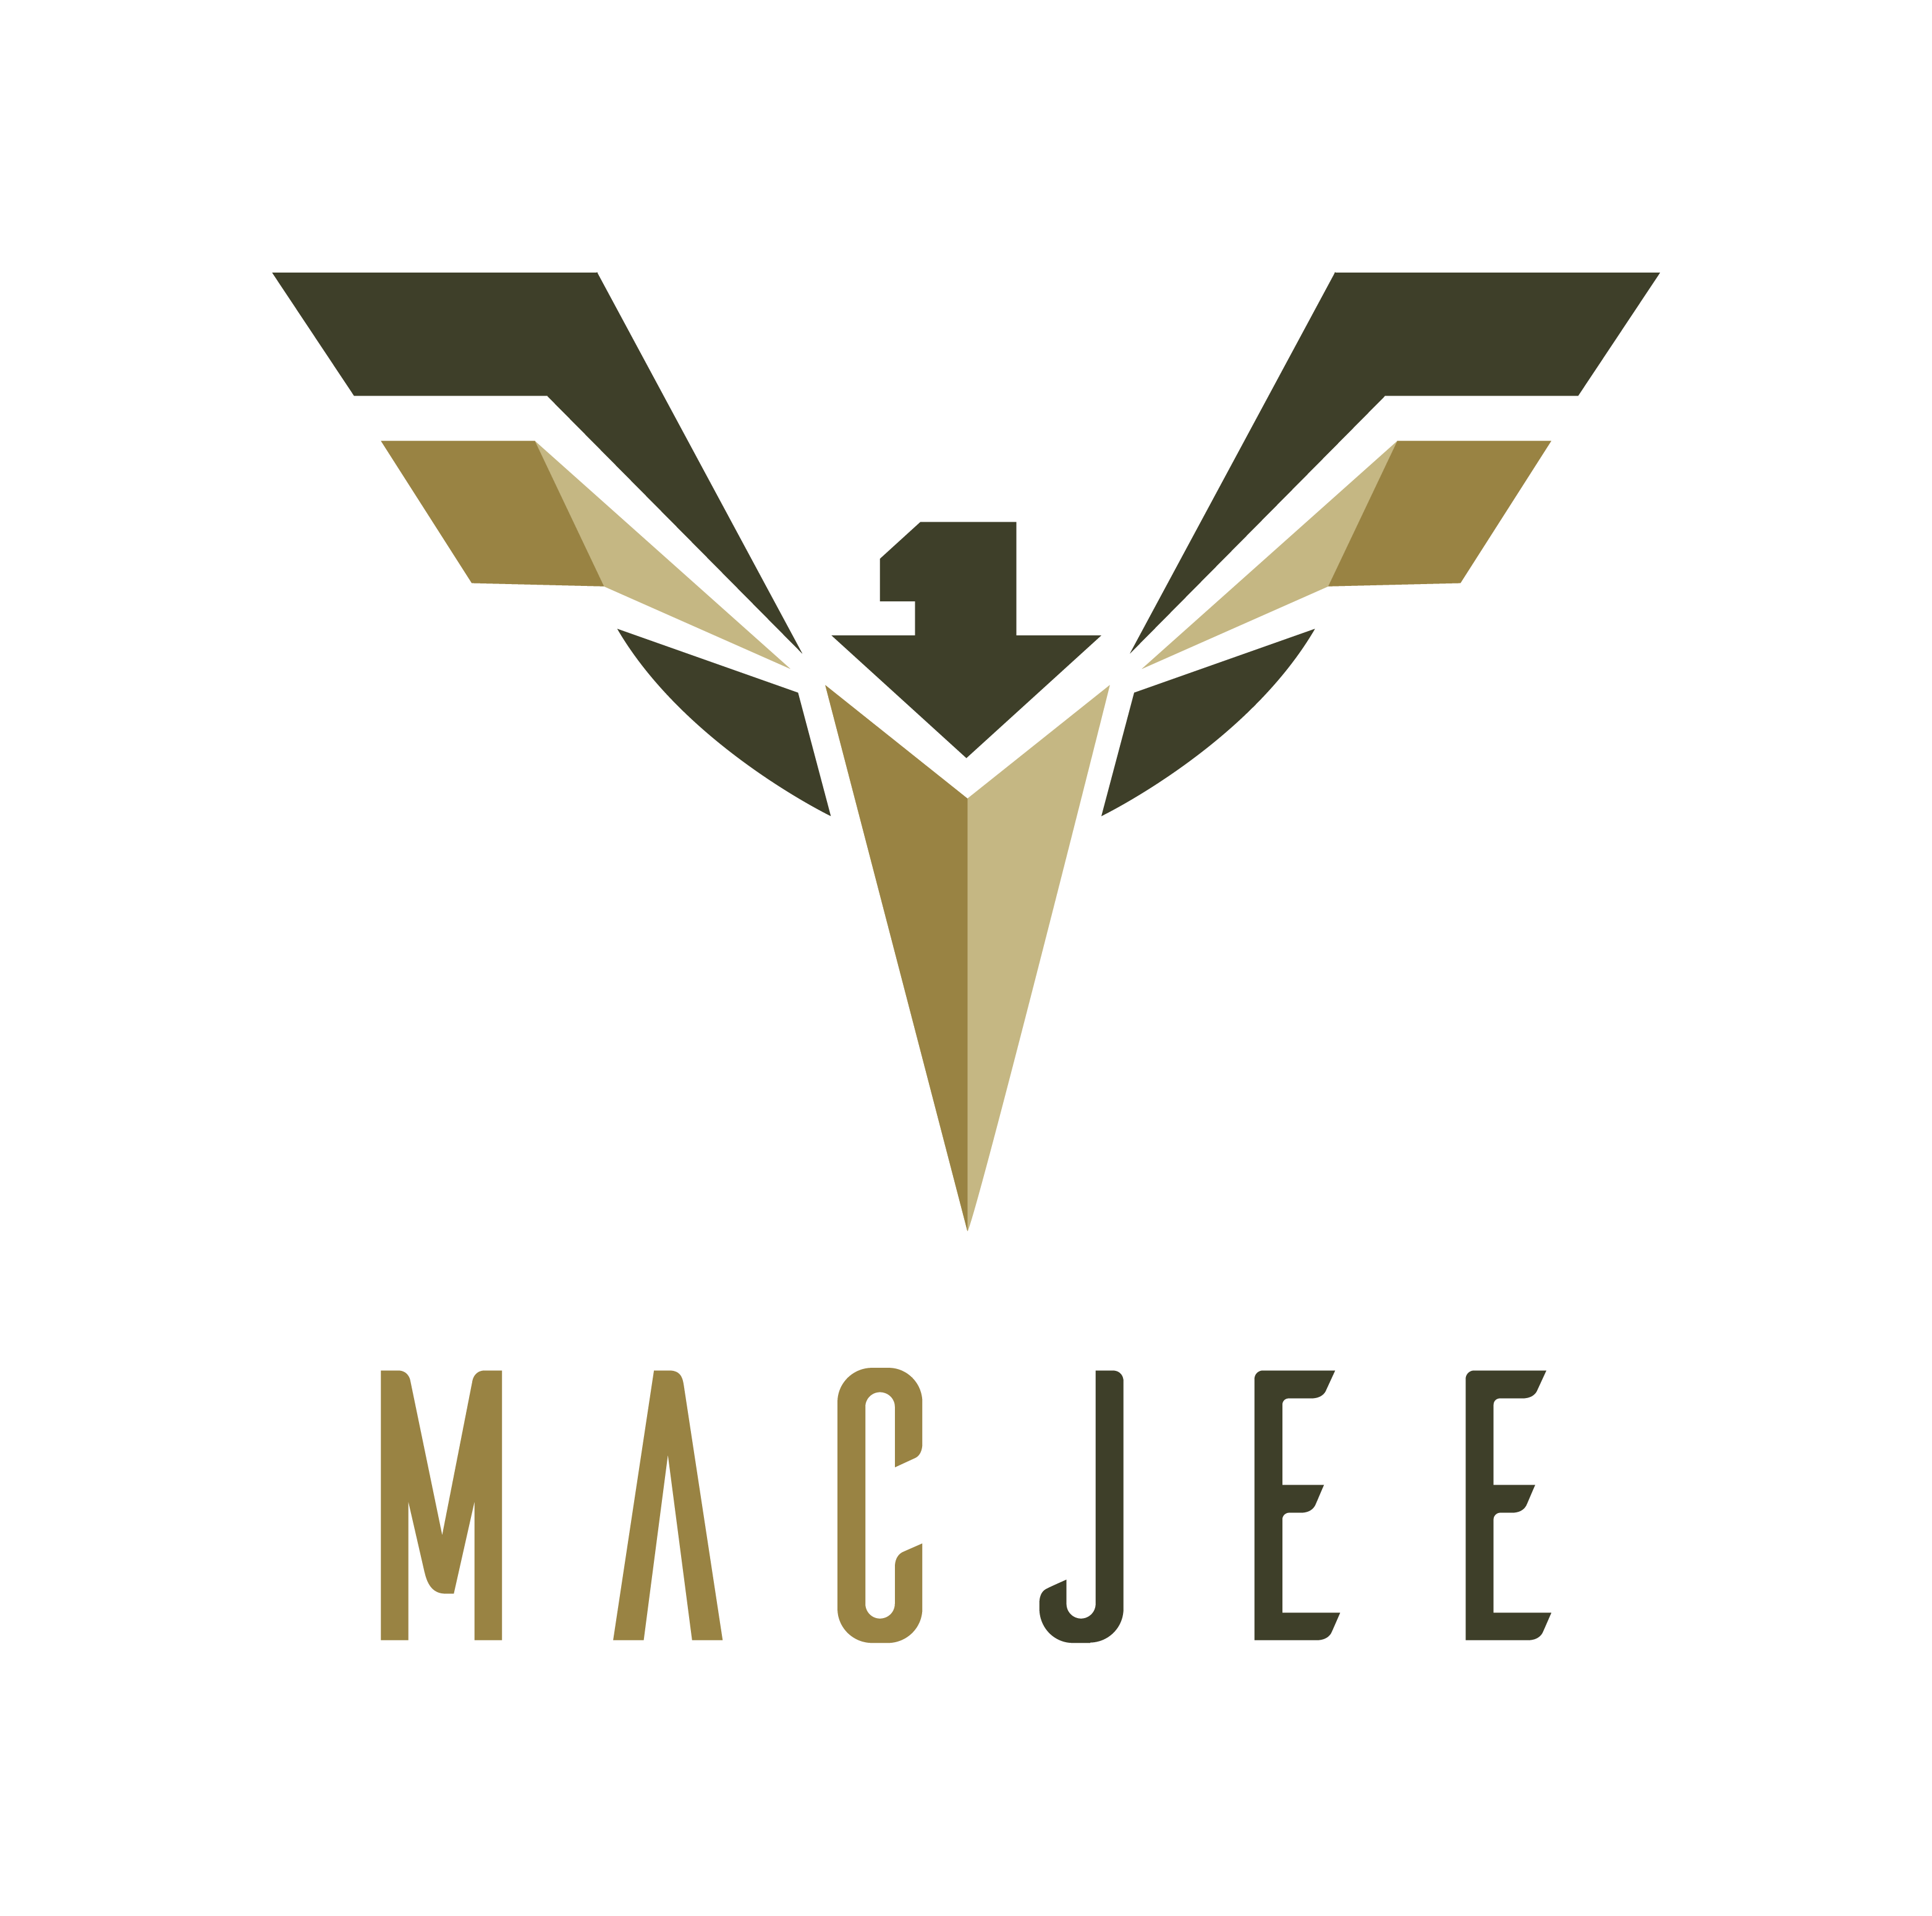 Mac Jee